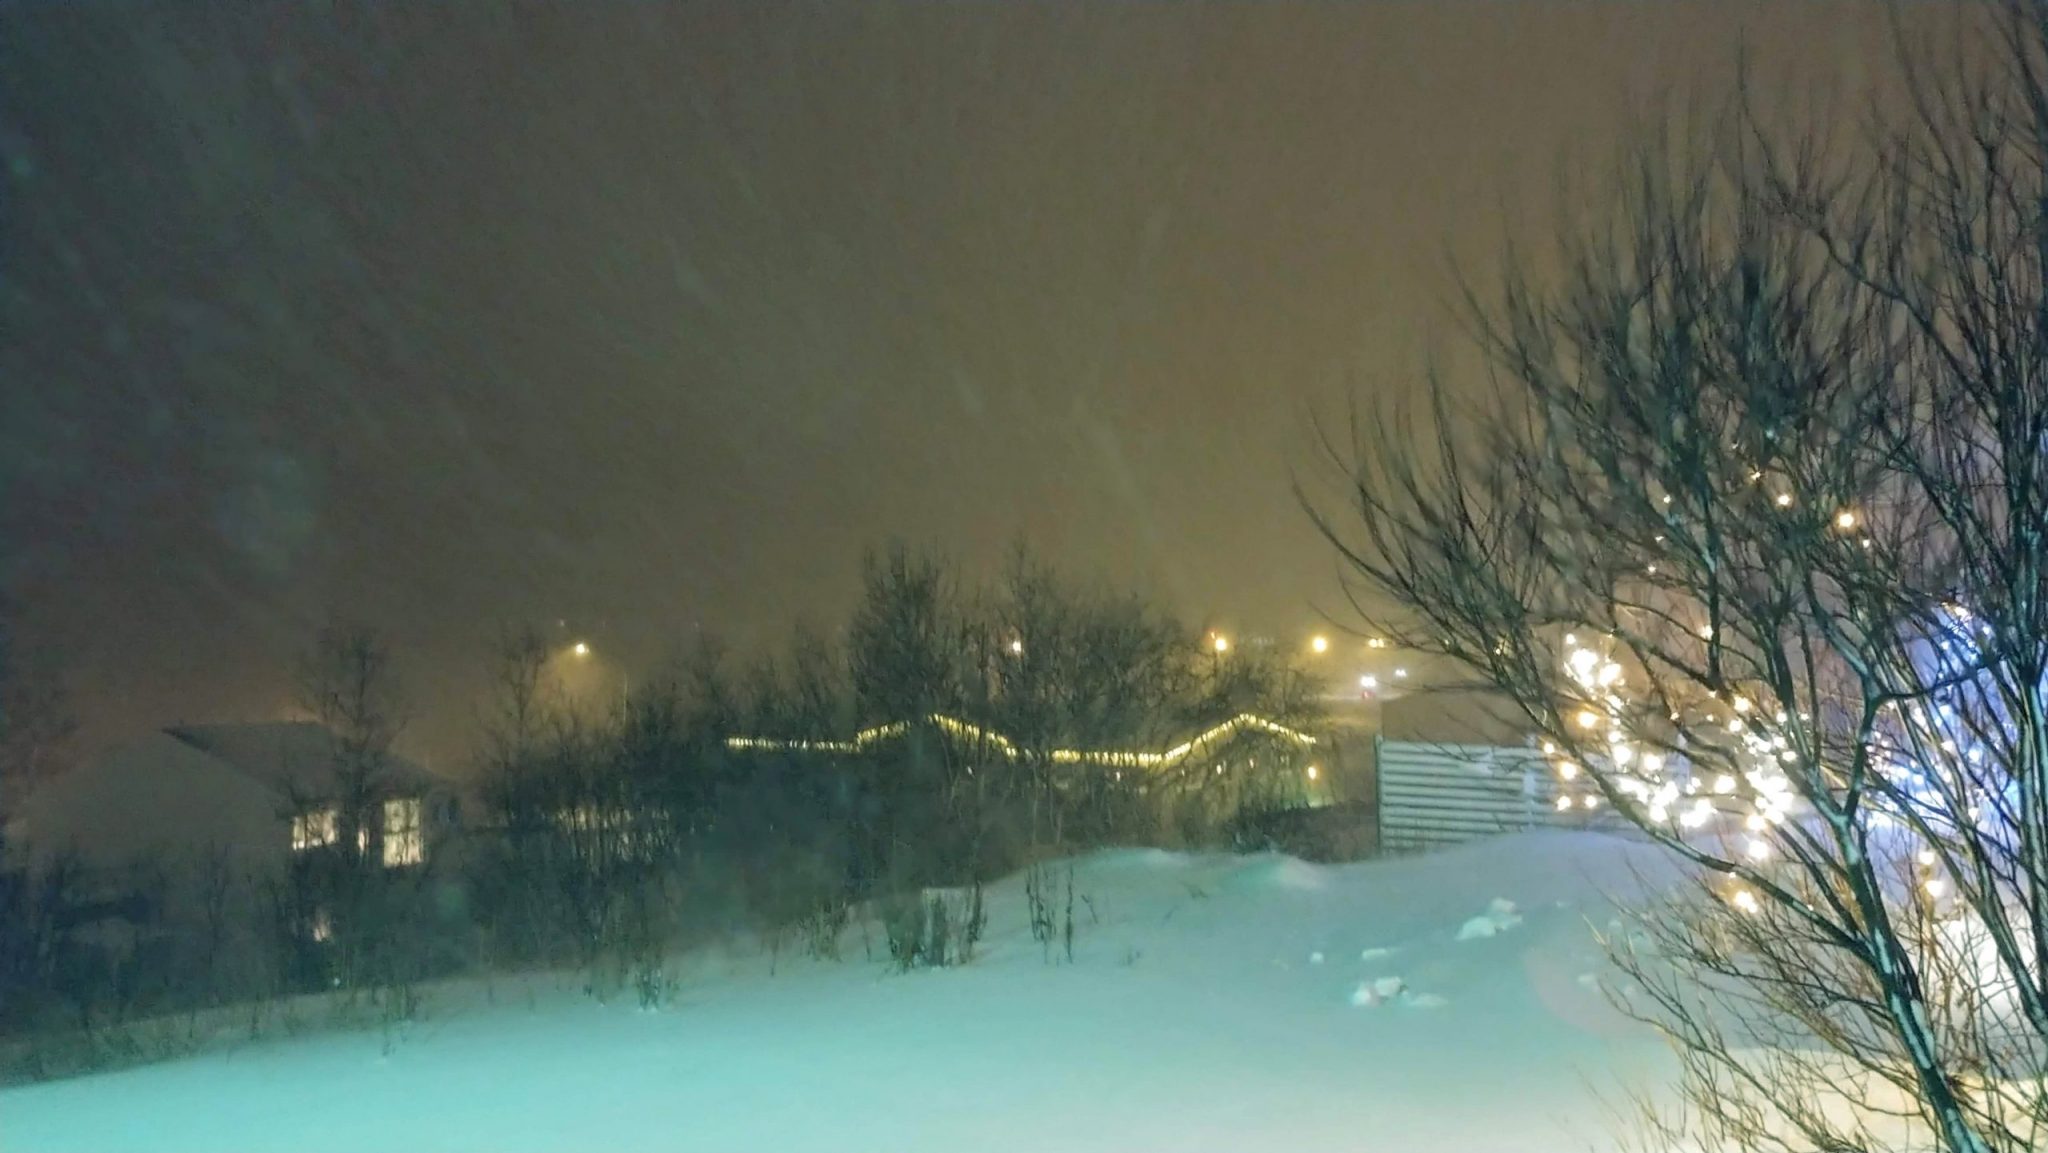 Snowstorm and Christmas Lights